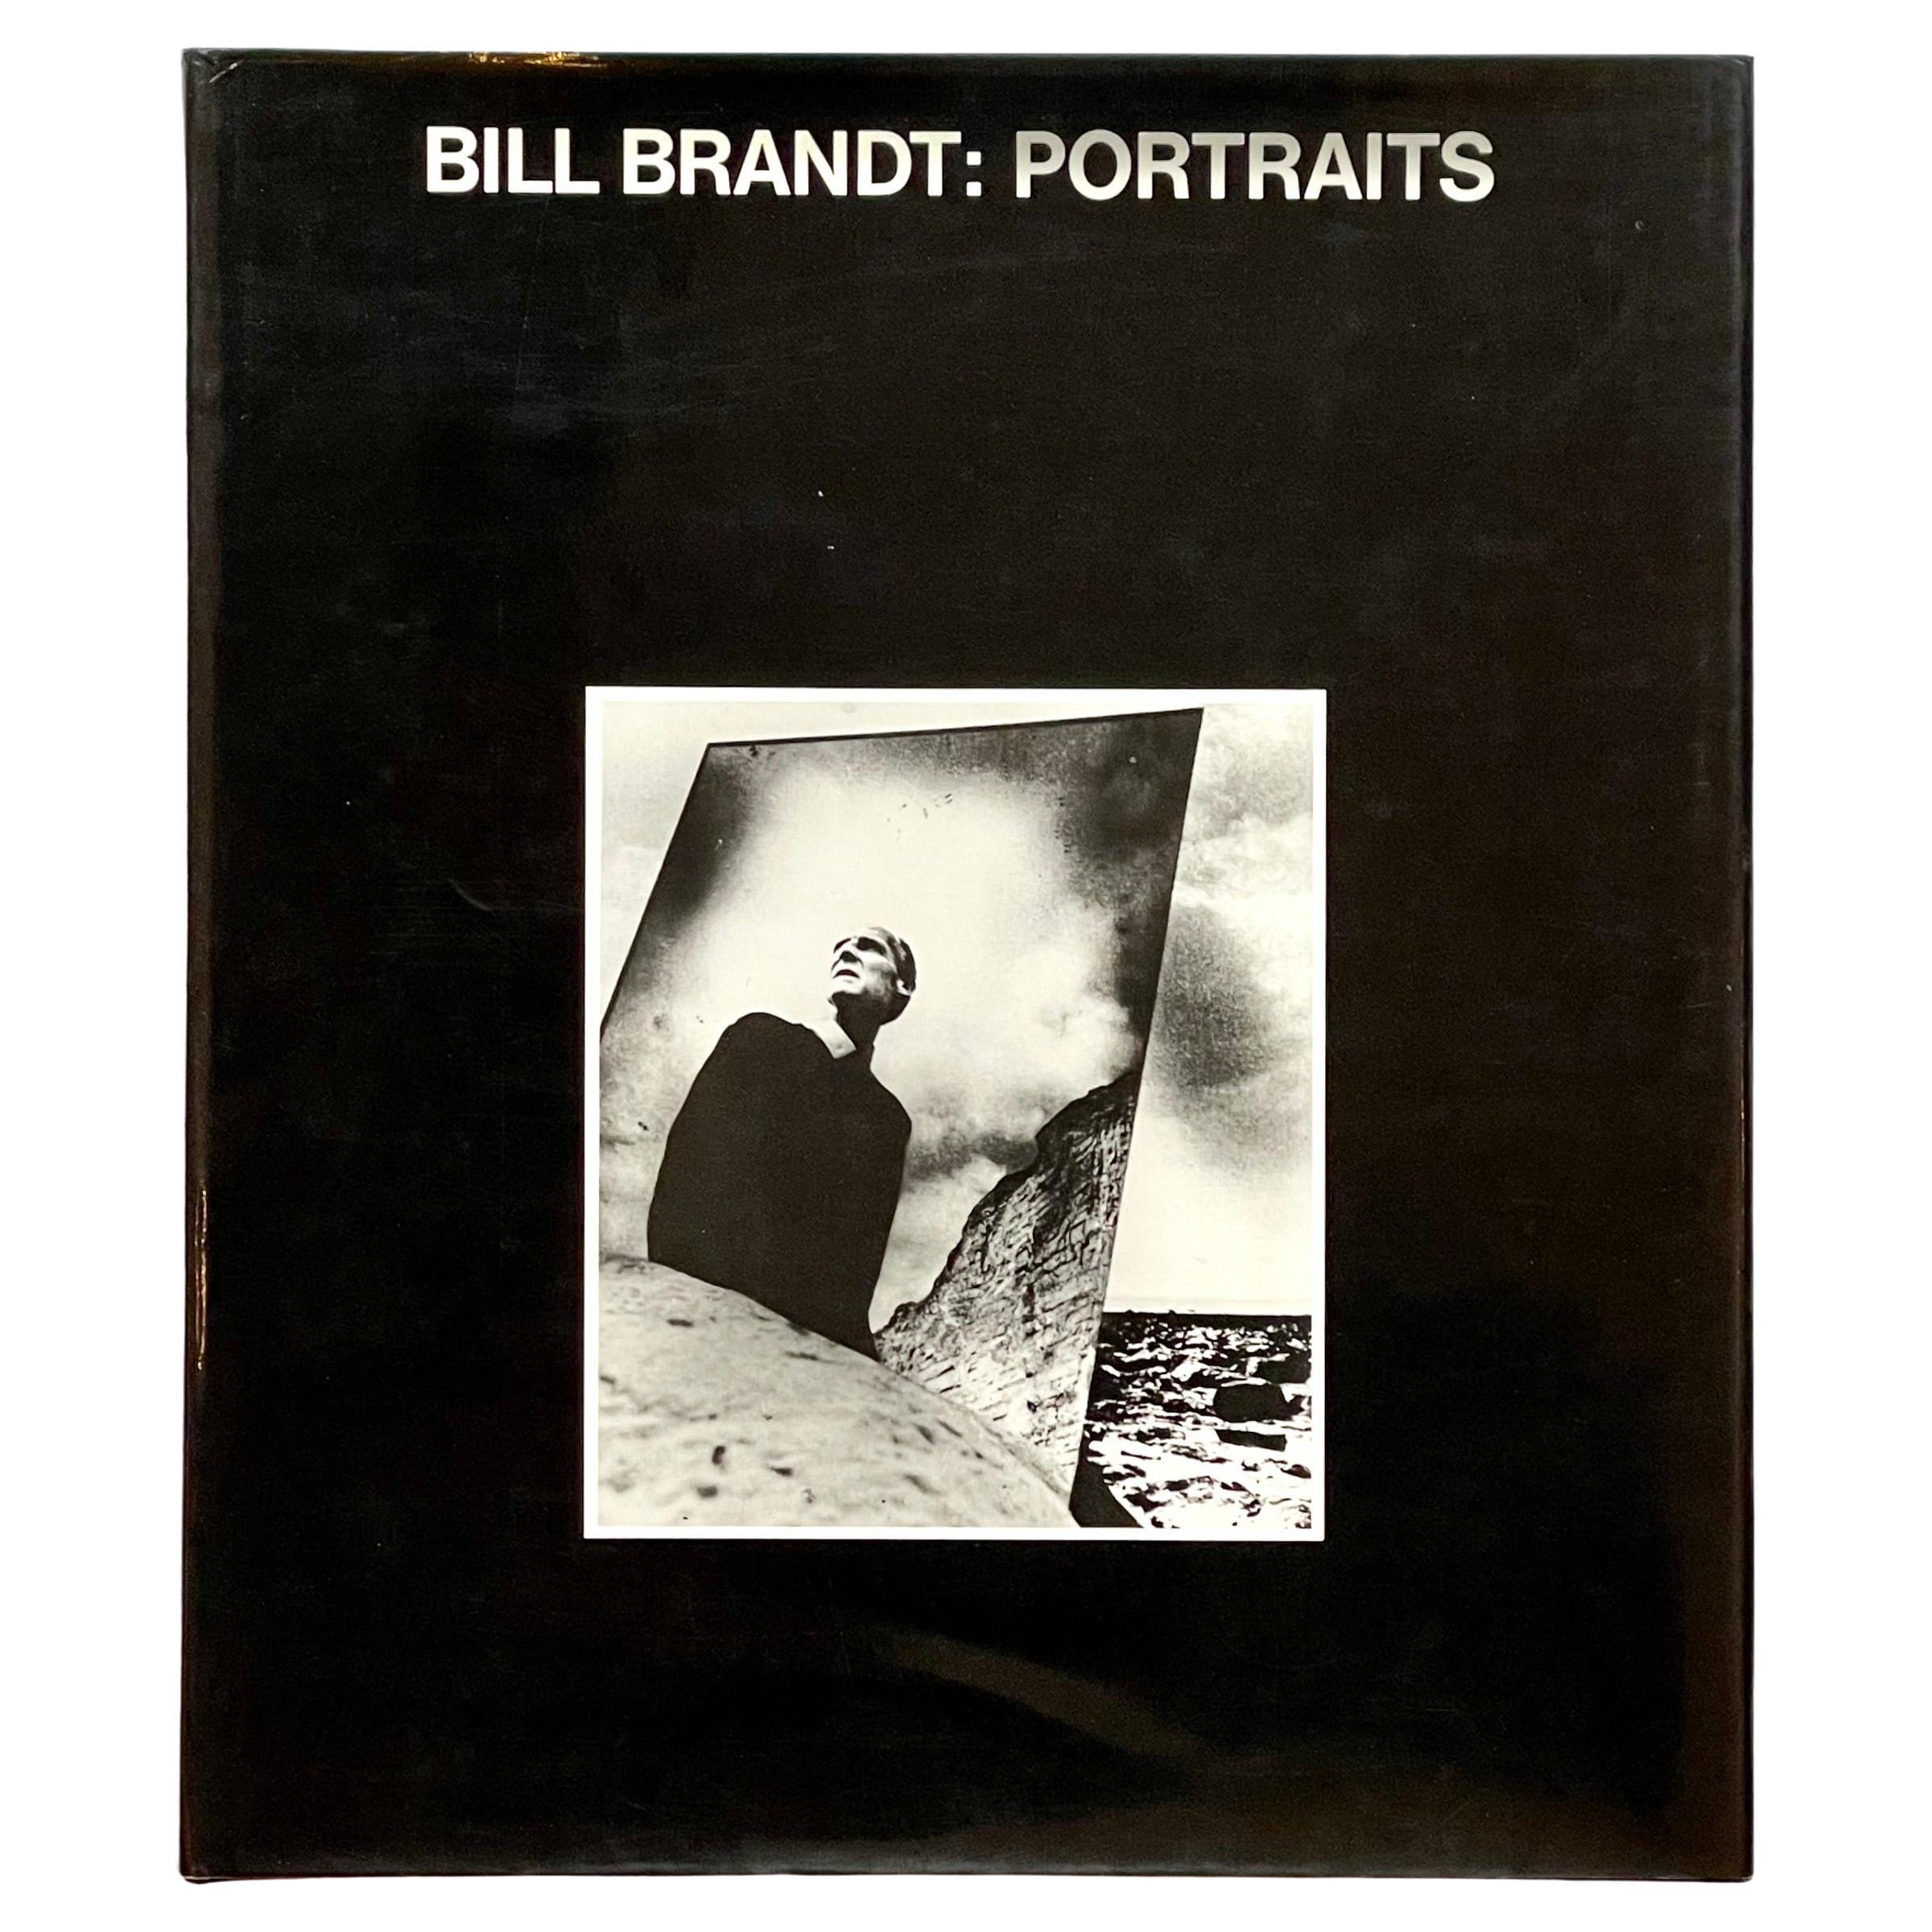 Bill Brandt: Portraits, 1st Edition, Gordon Fraser, London, 1982